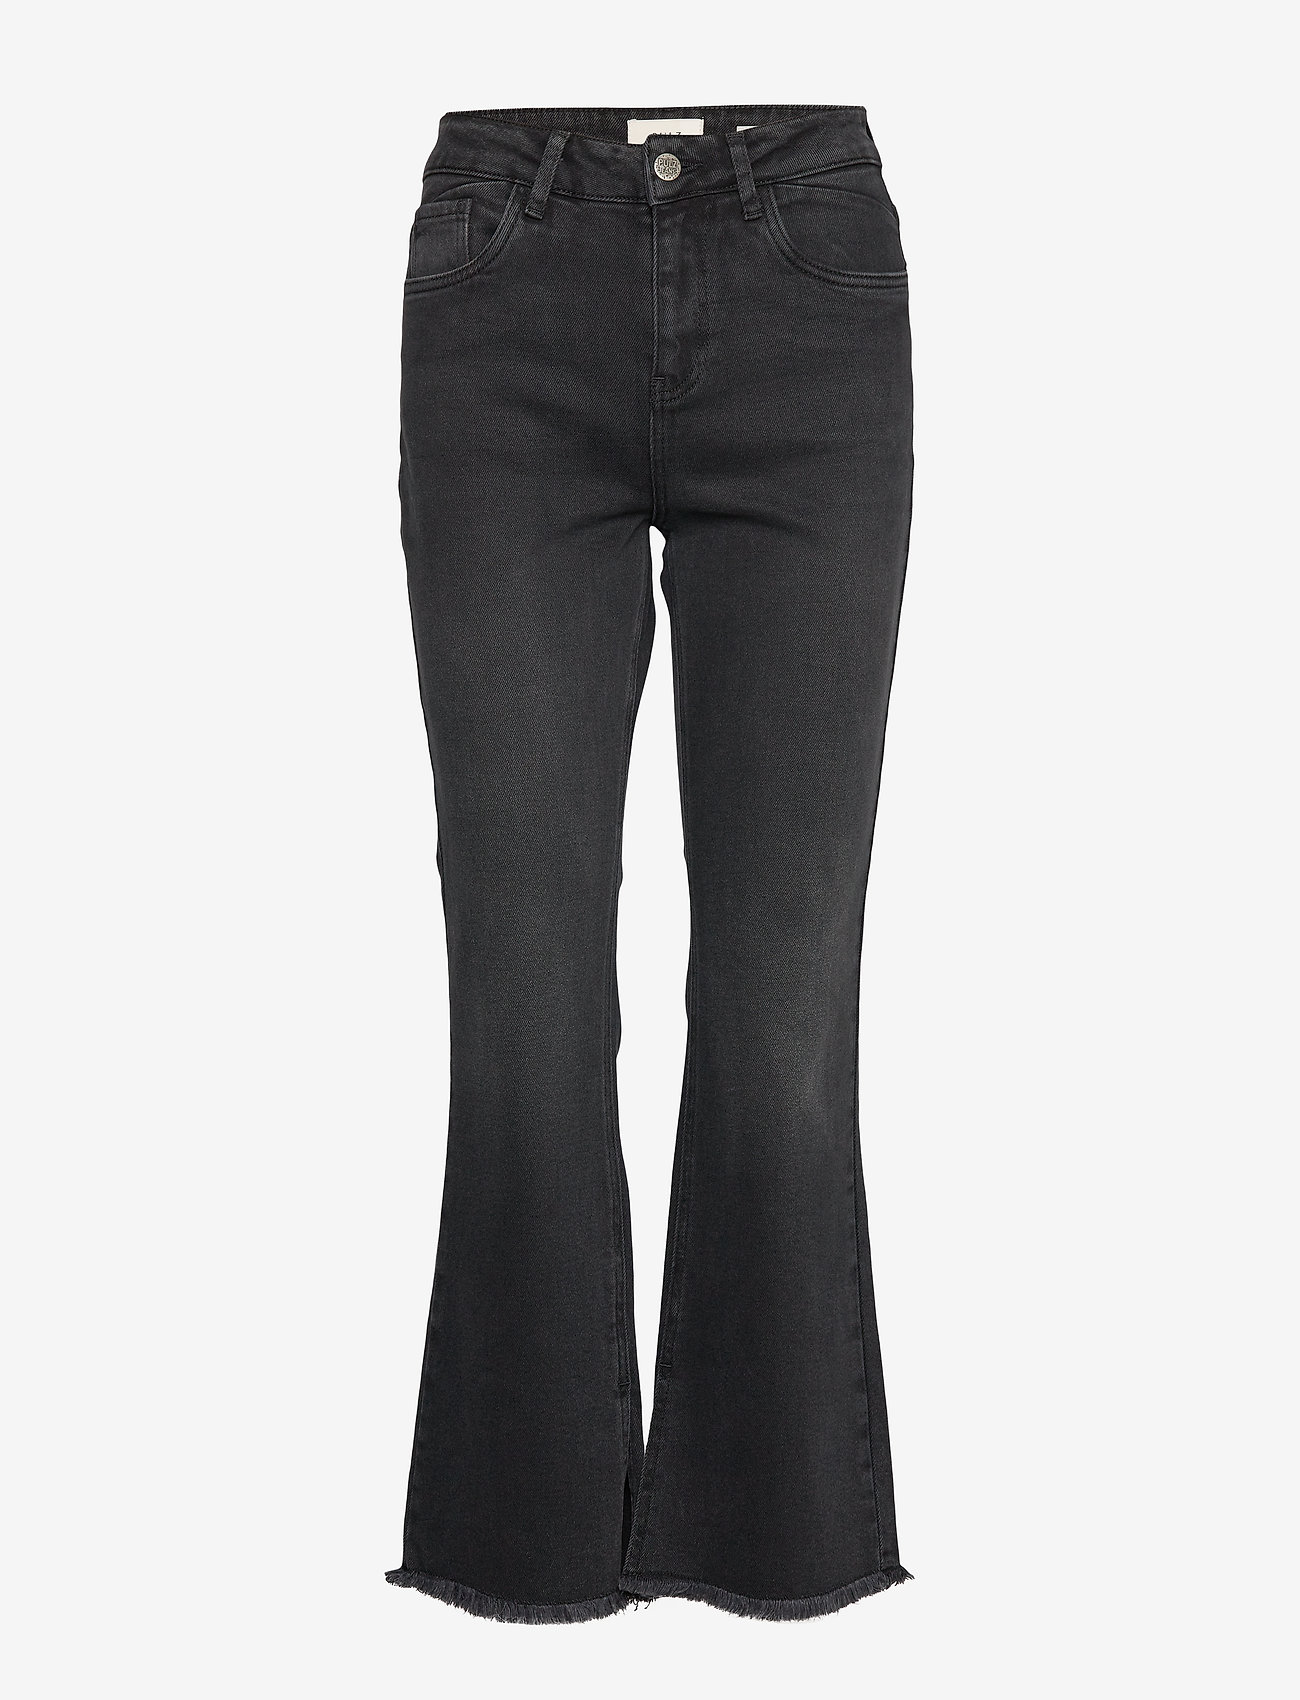 black denim flare jeans